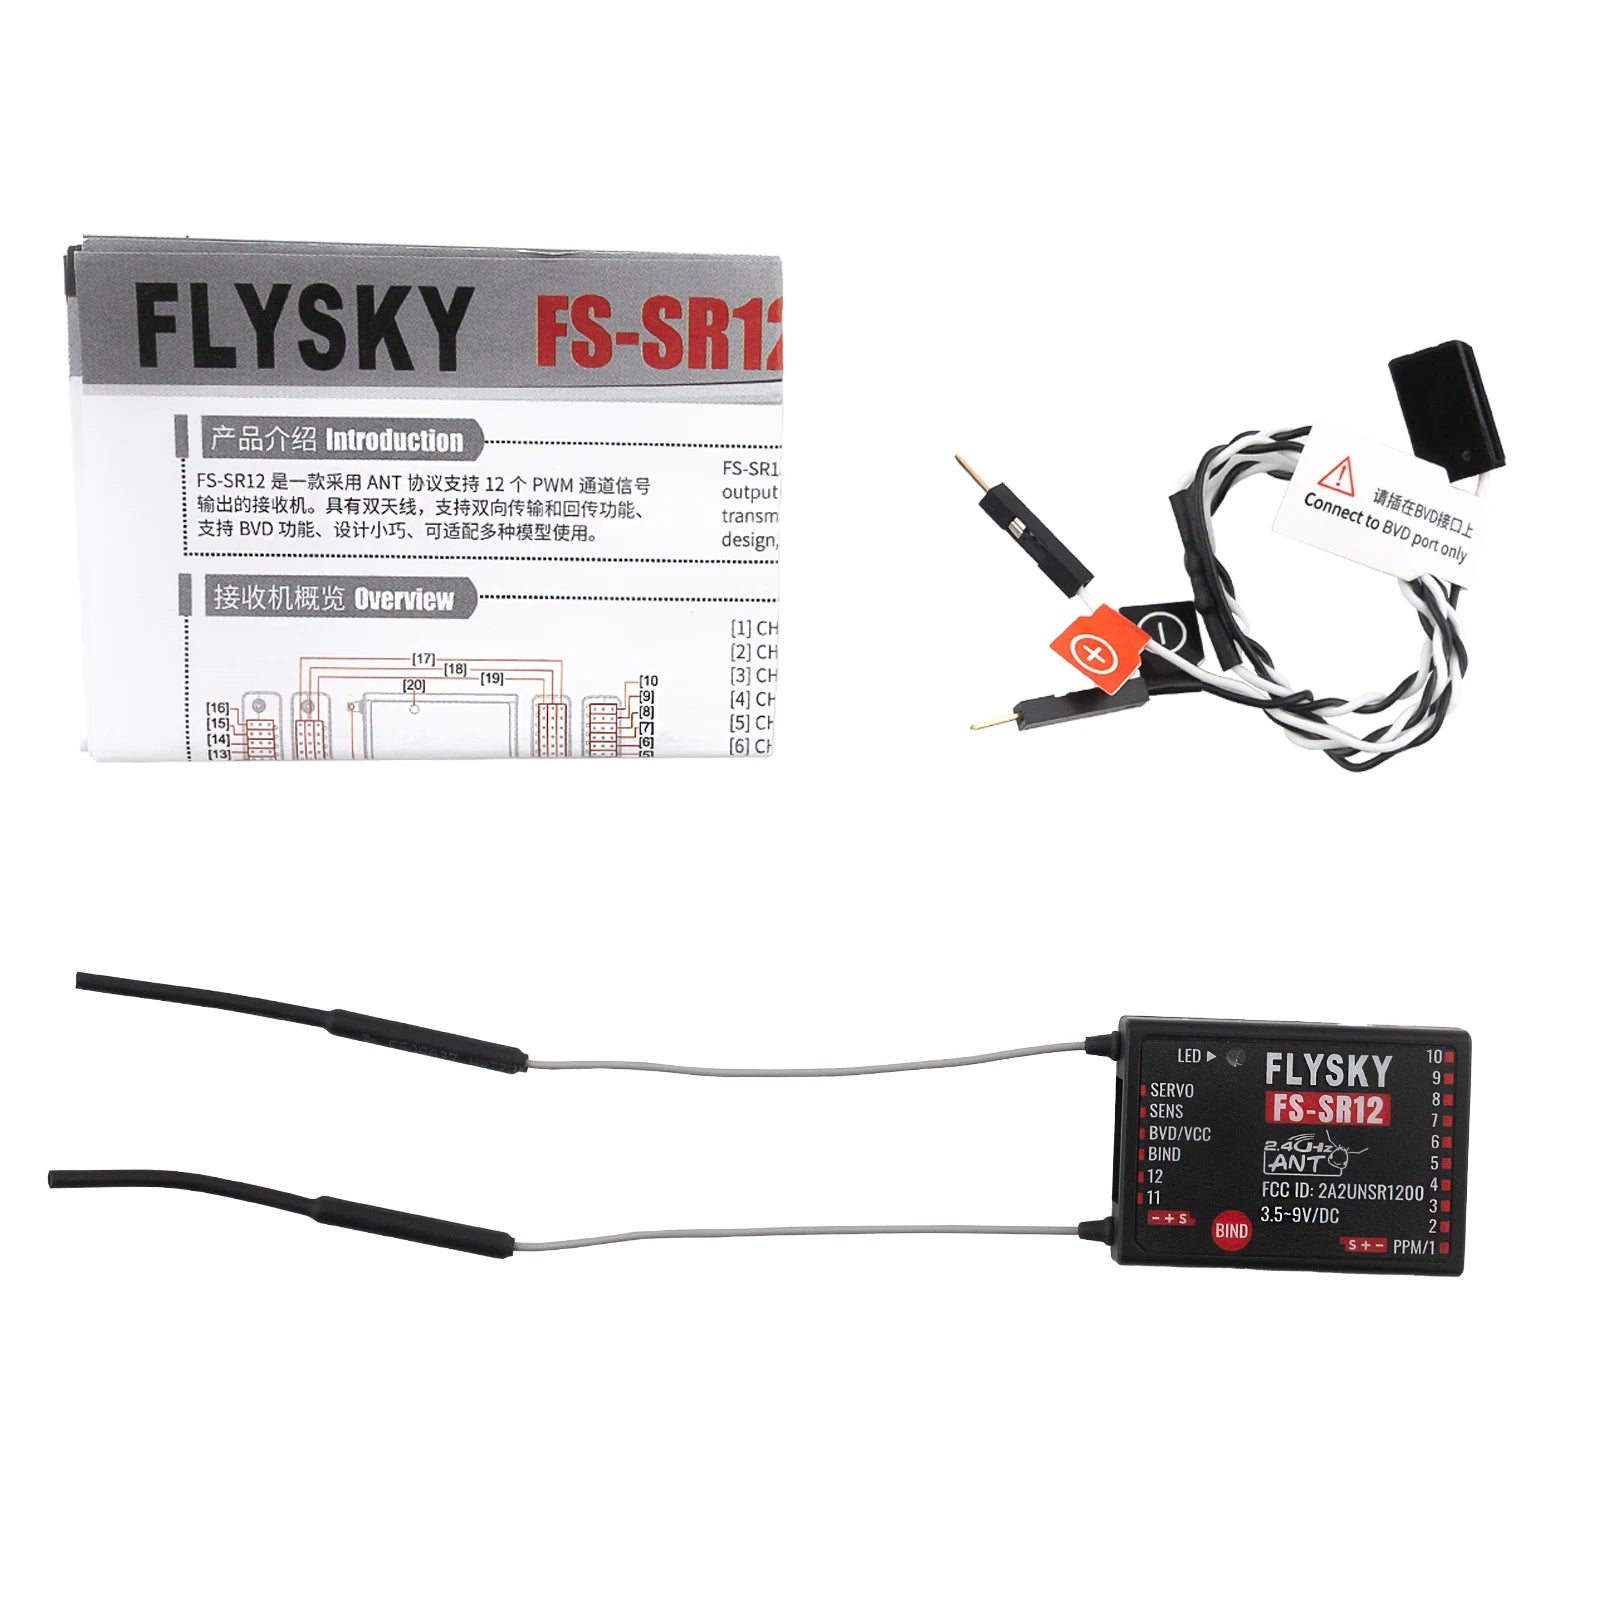 FLYSKY FS-SR12 12CH 2.4G Receiver, SERVO SENS FS-SR12 BVD/VCC 481 BIND